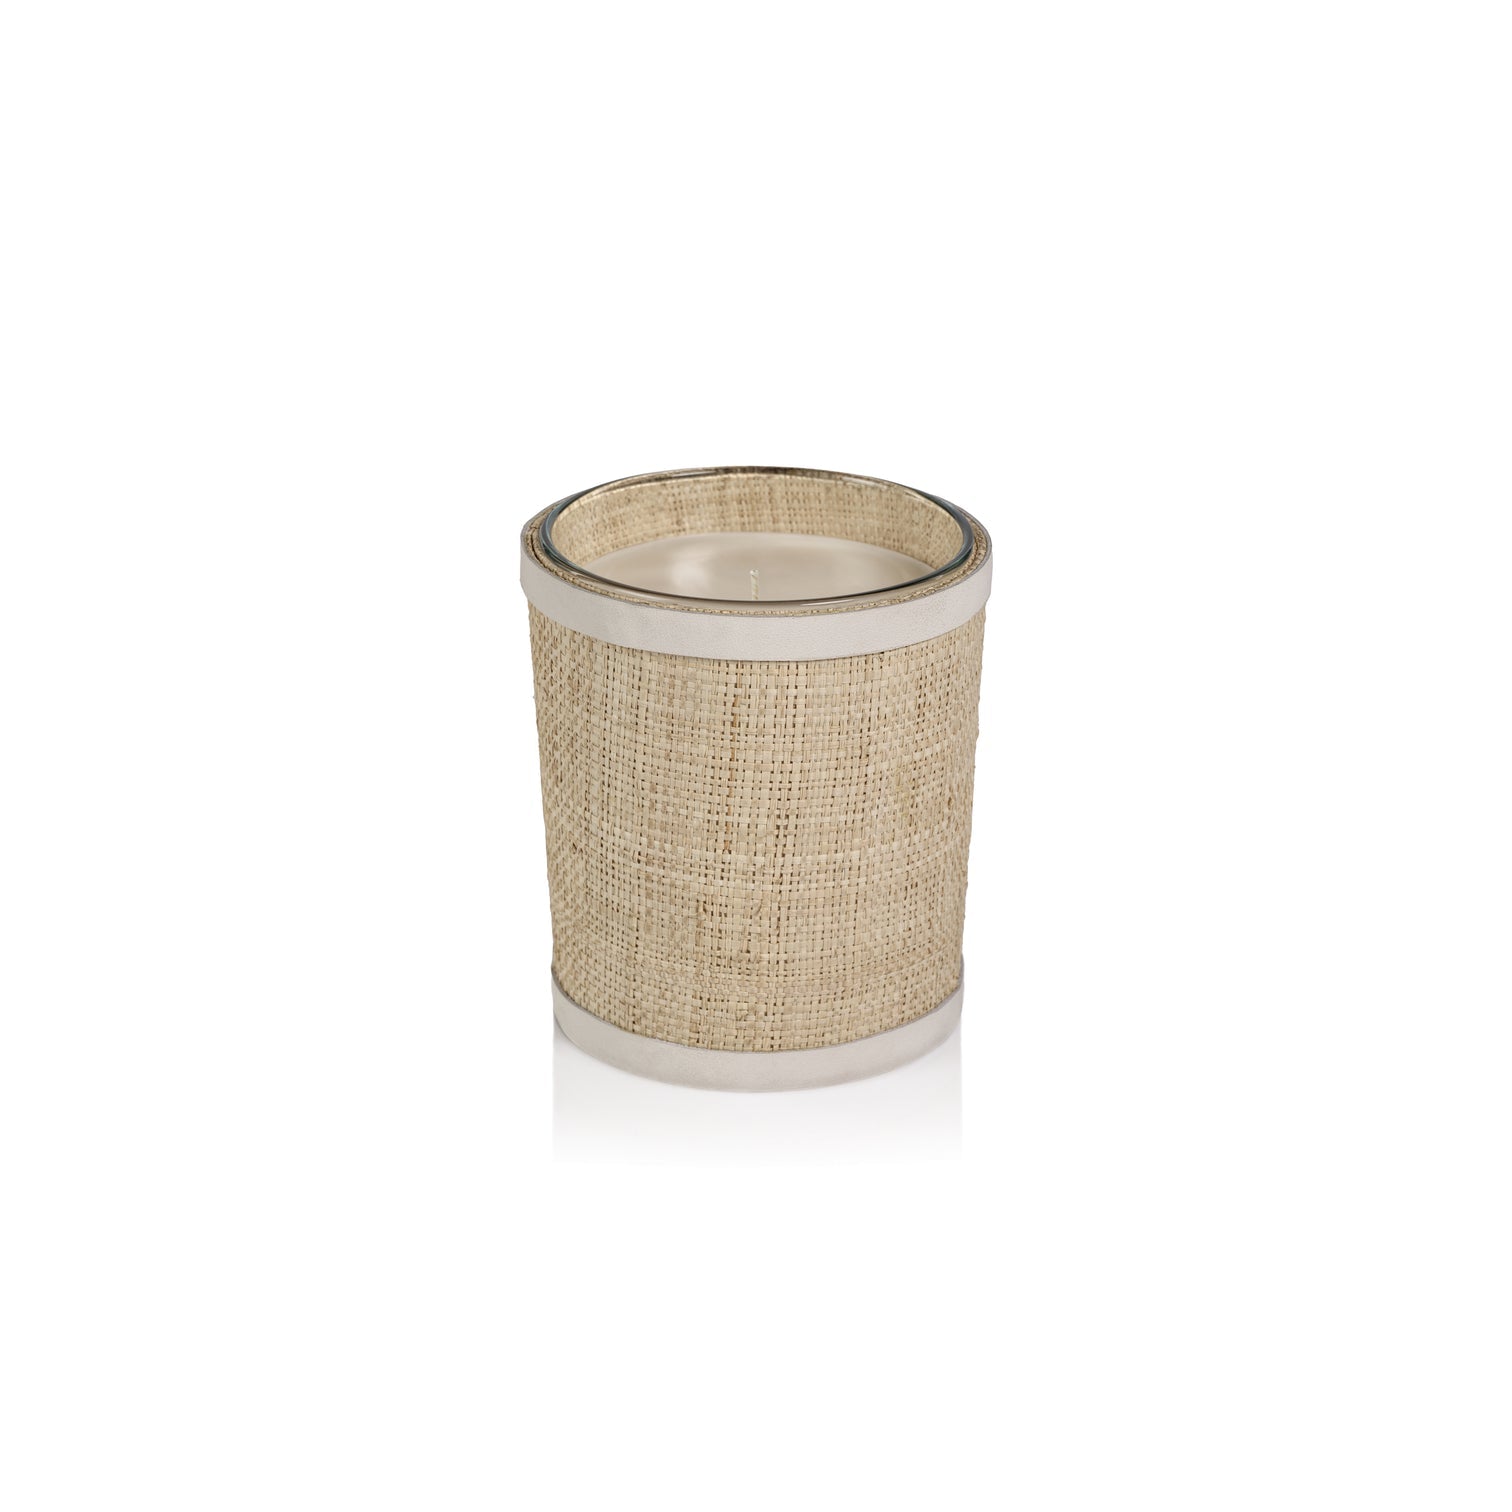 Candle in Natural Raffia Basket w/ Leather Trim - White